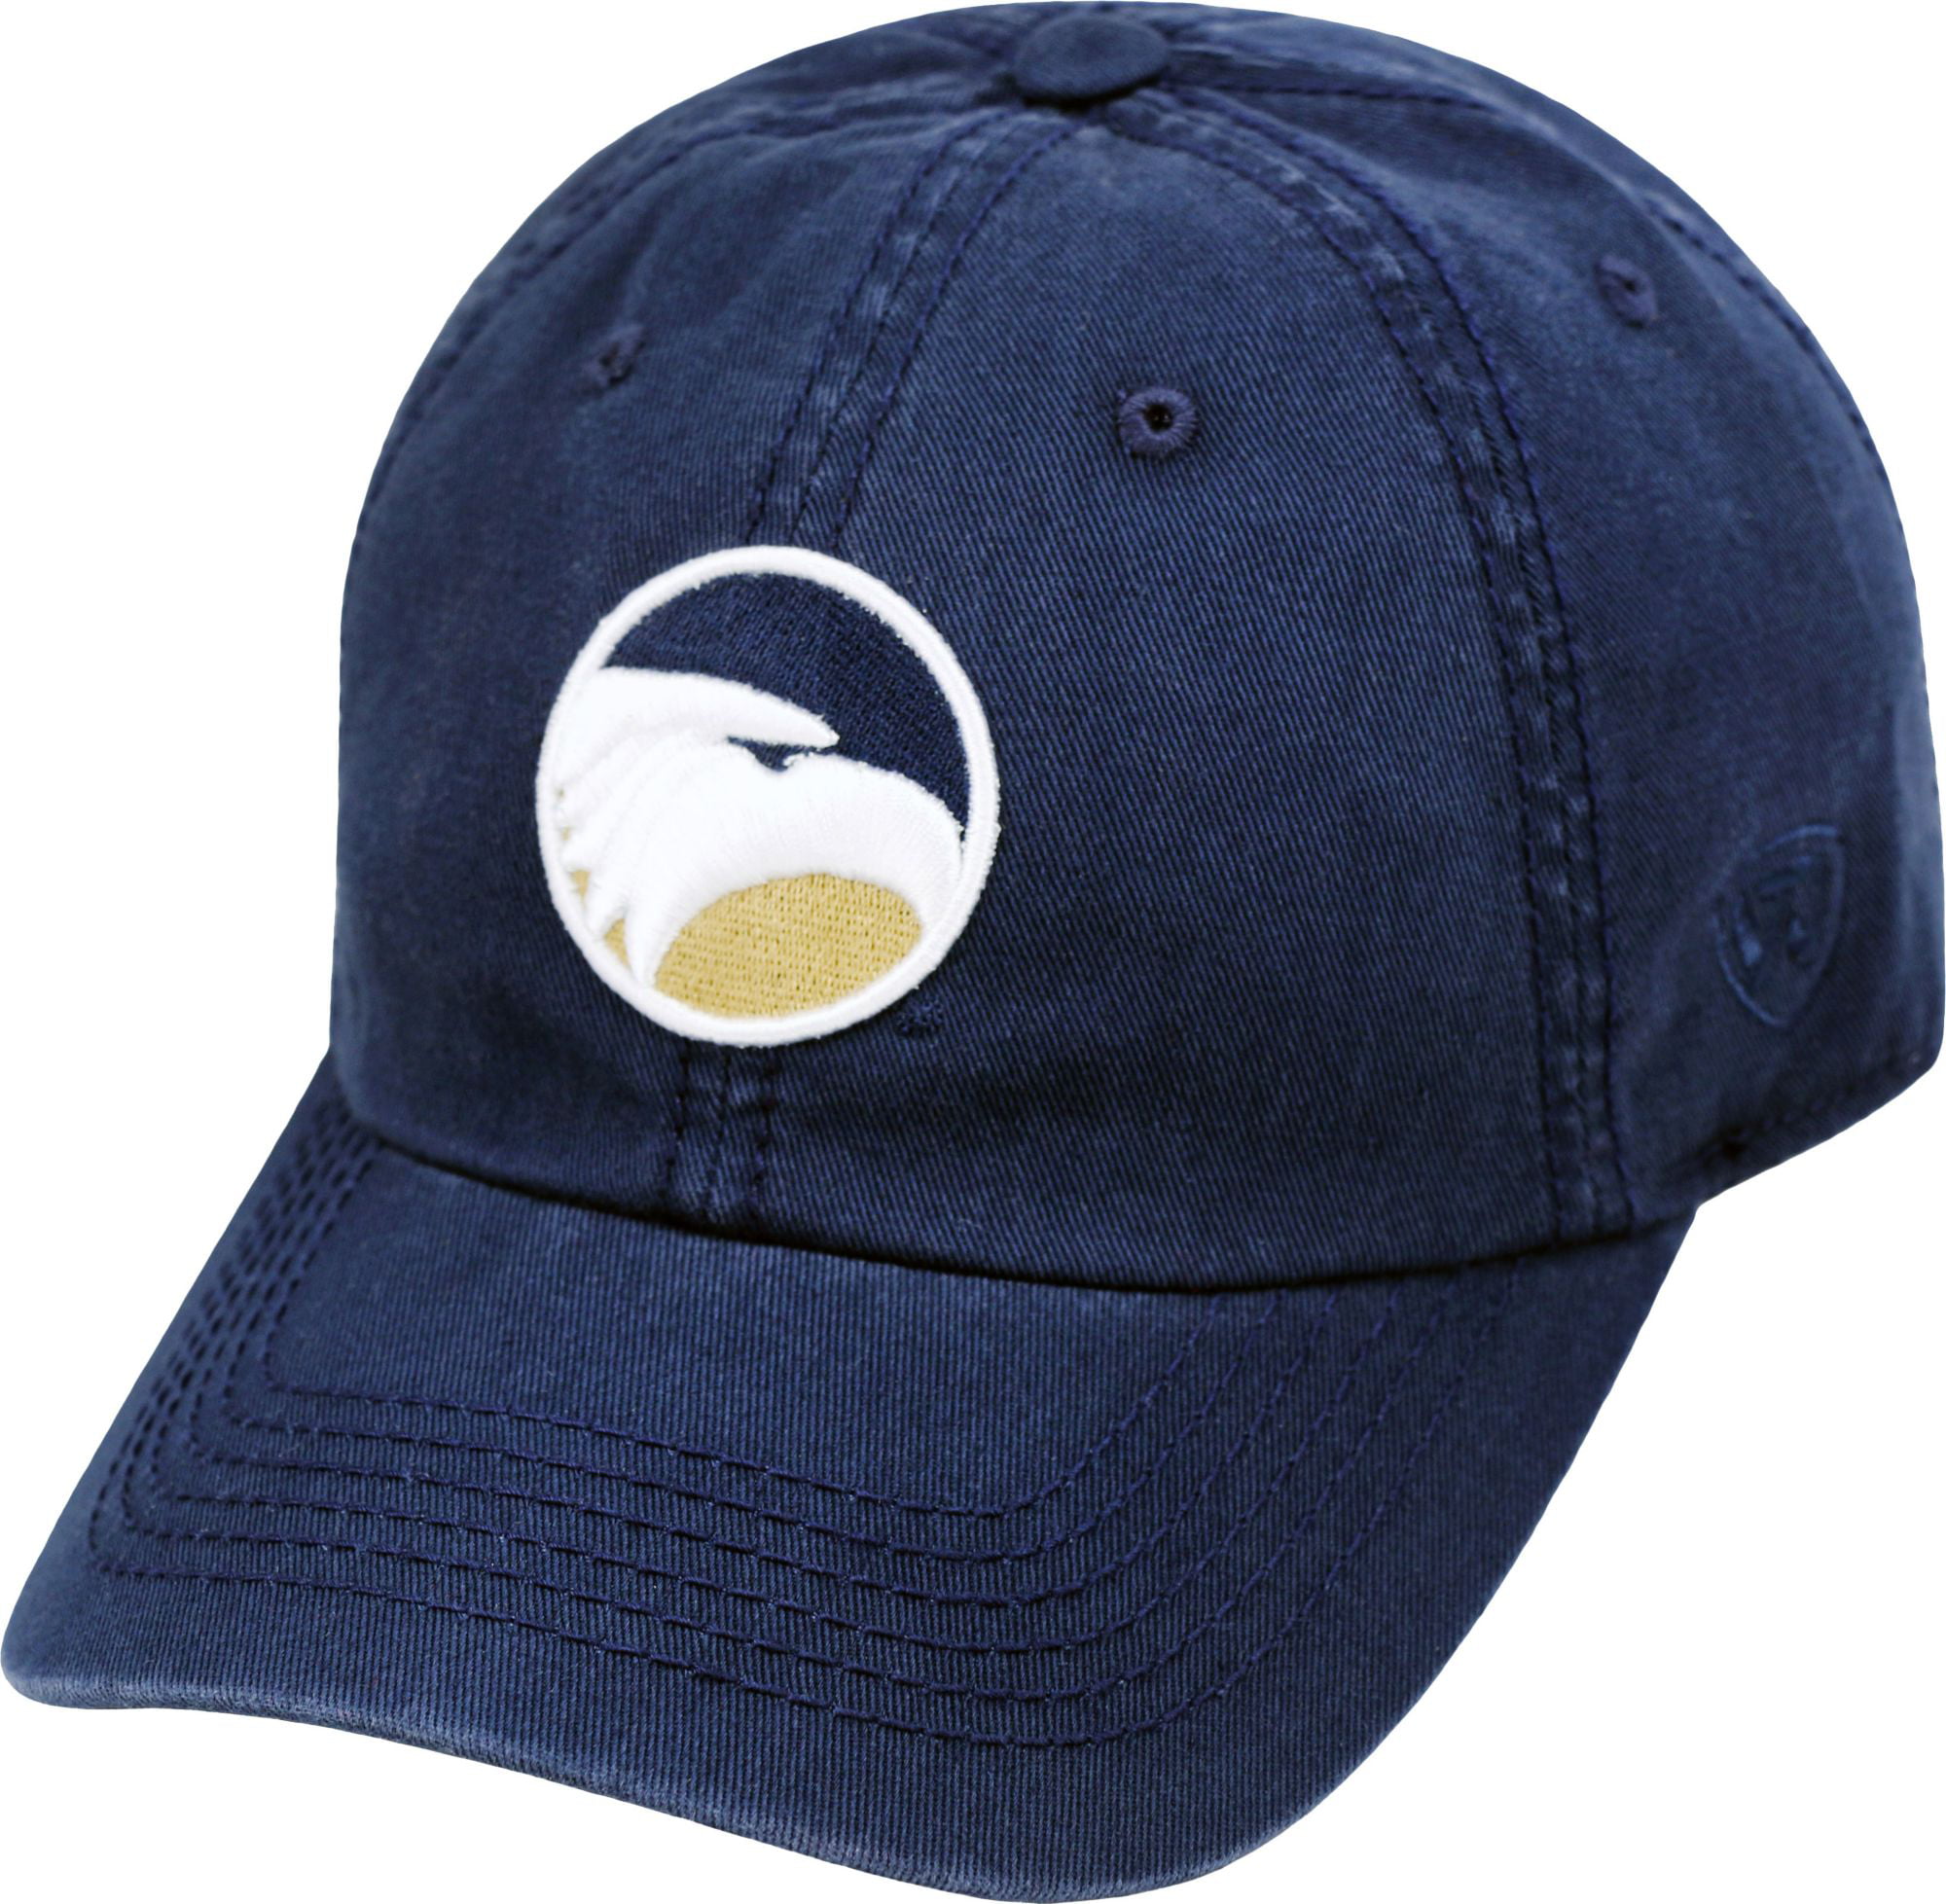 ahtbht USA Hockey Logos Snapback Hat Hip Hop Soft Mens Baseball Cap 